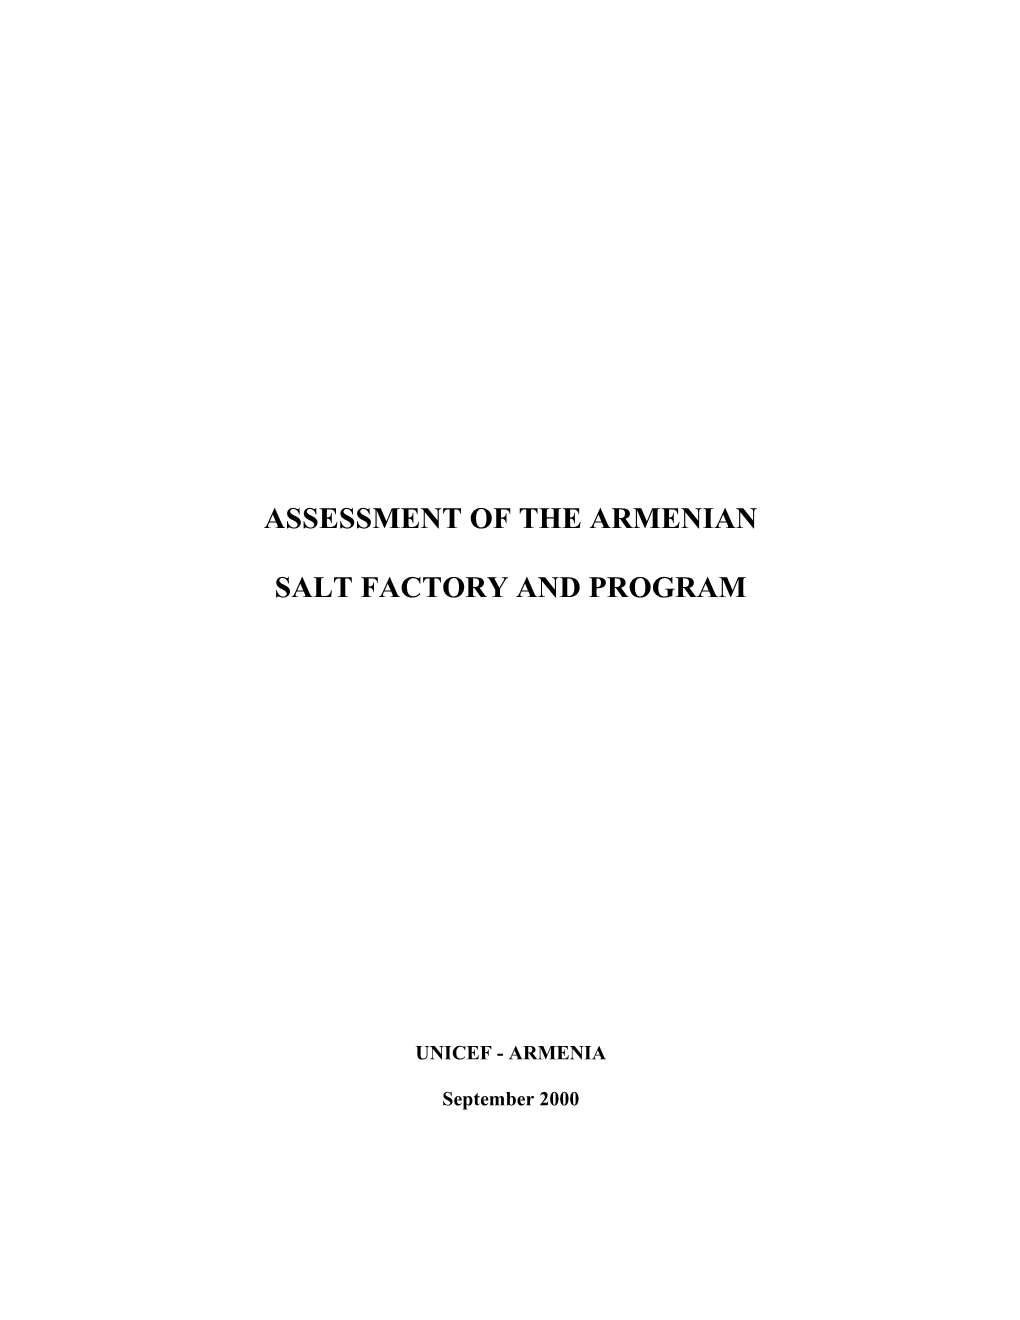 Assessment of the Armenian Iodized Salt Factory and Program